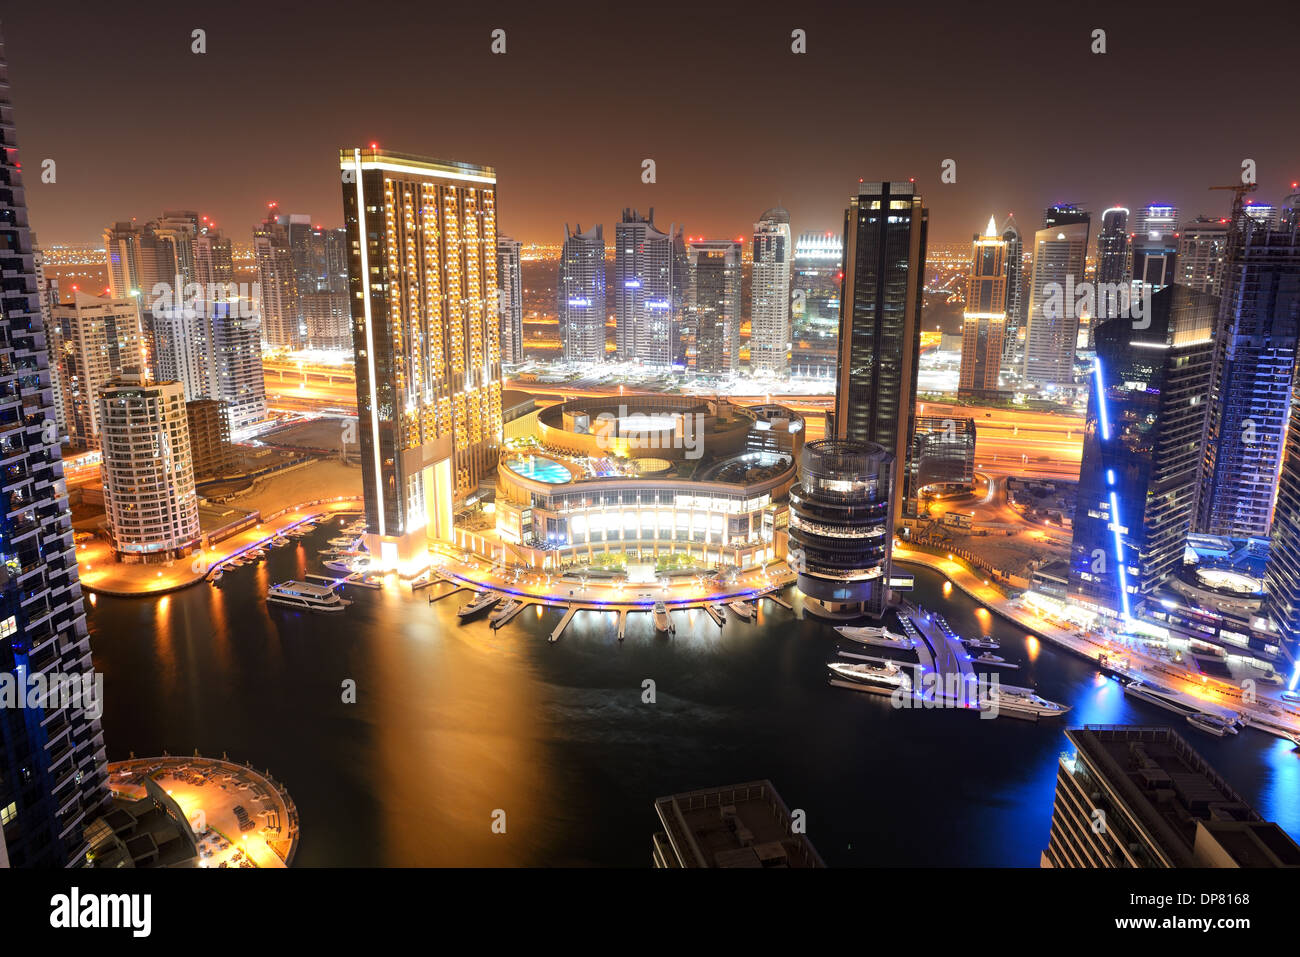 The night illumination of Dubai Marina, Dubai, UAE Stock Photo